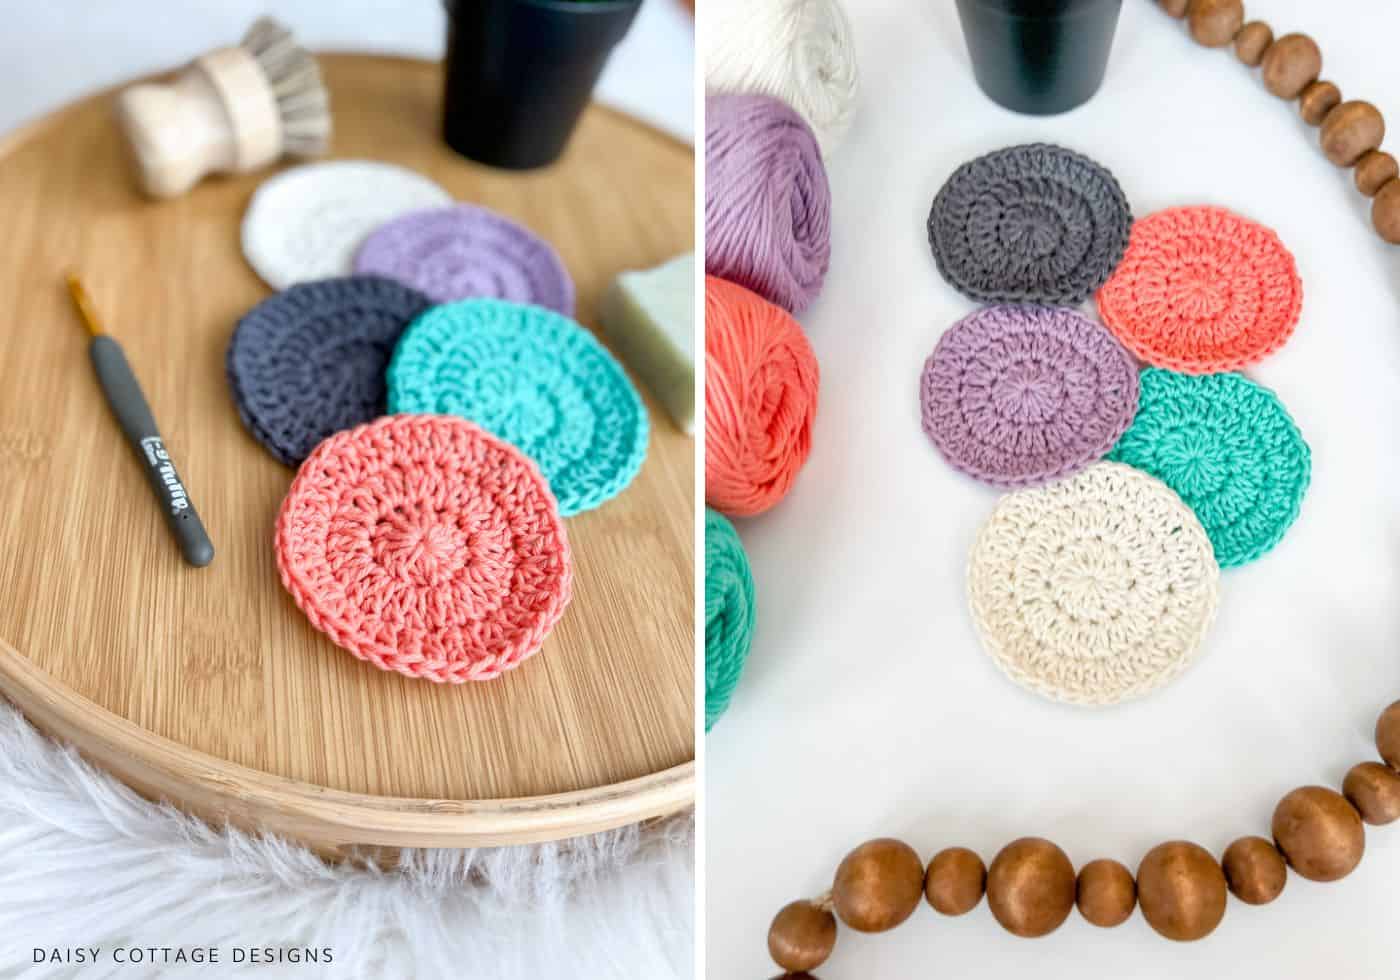 Handmade Washcloth Crochet Cotton 100% - Natural Color